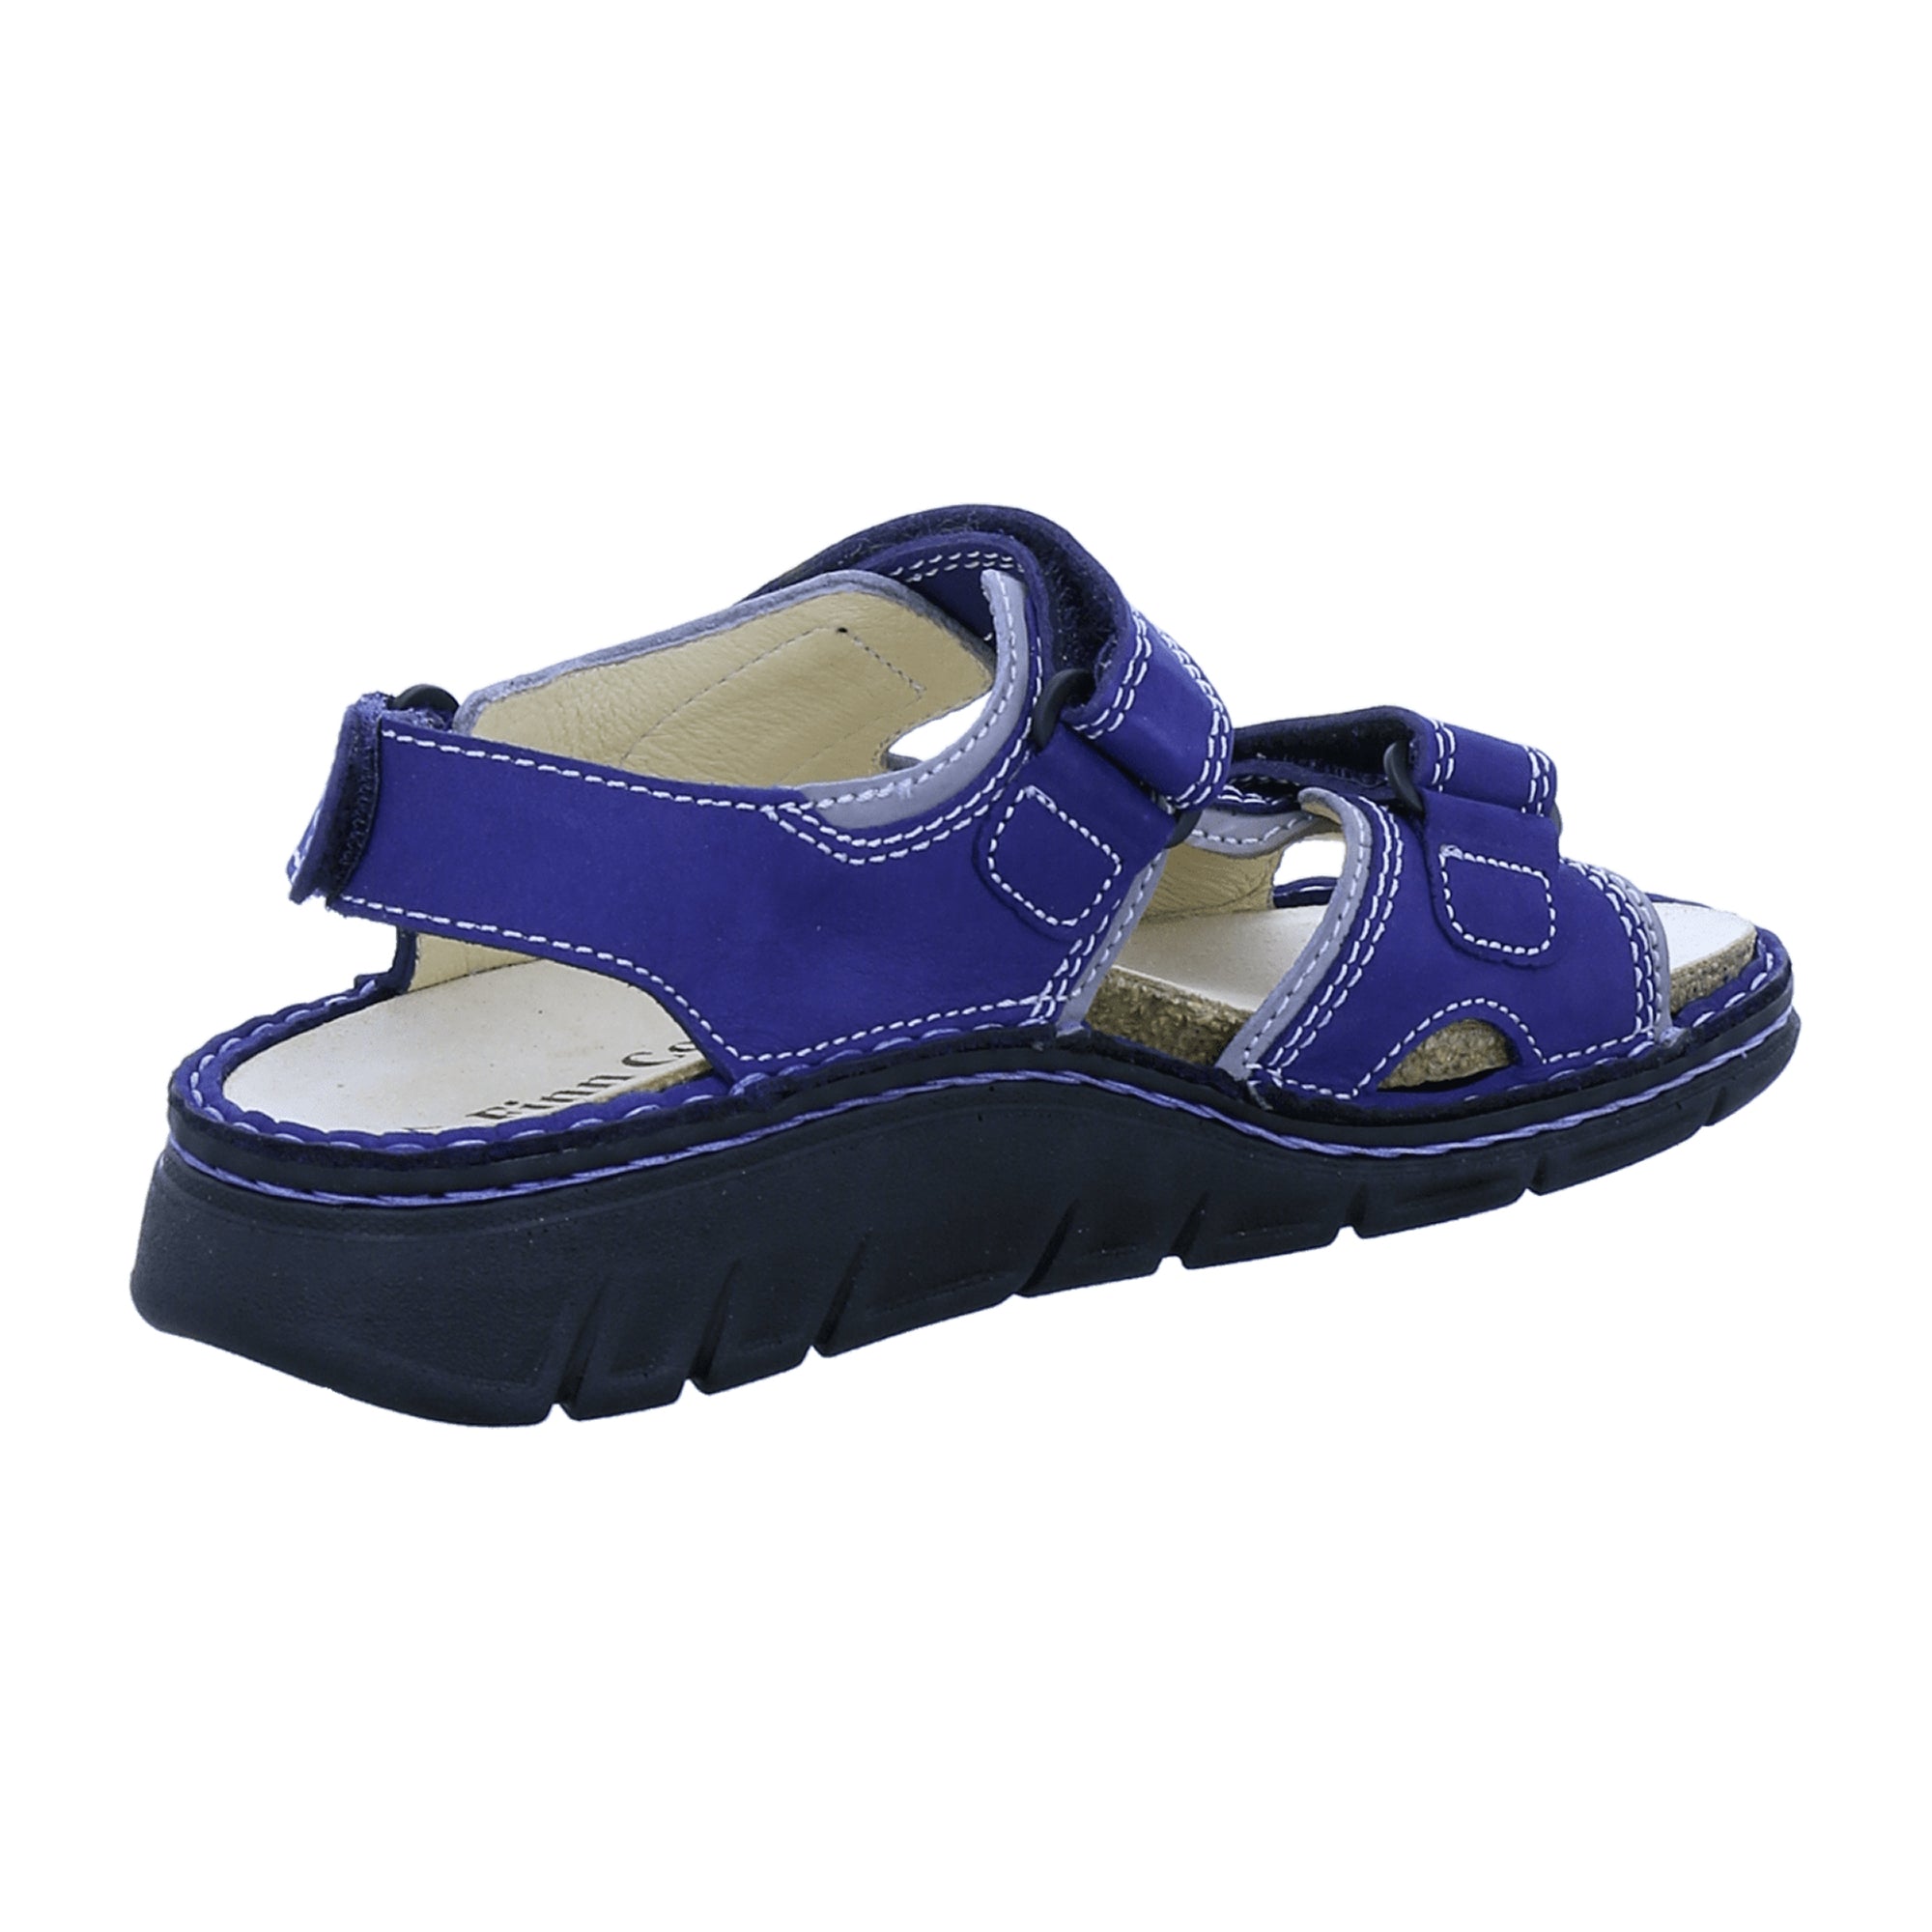 Finn Comfort Wanaka Men's Comfortable Walking Shoes - Durable, Stylish Blue Shoes 81540-9025